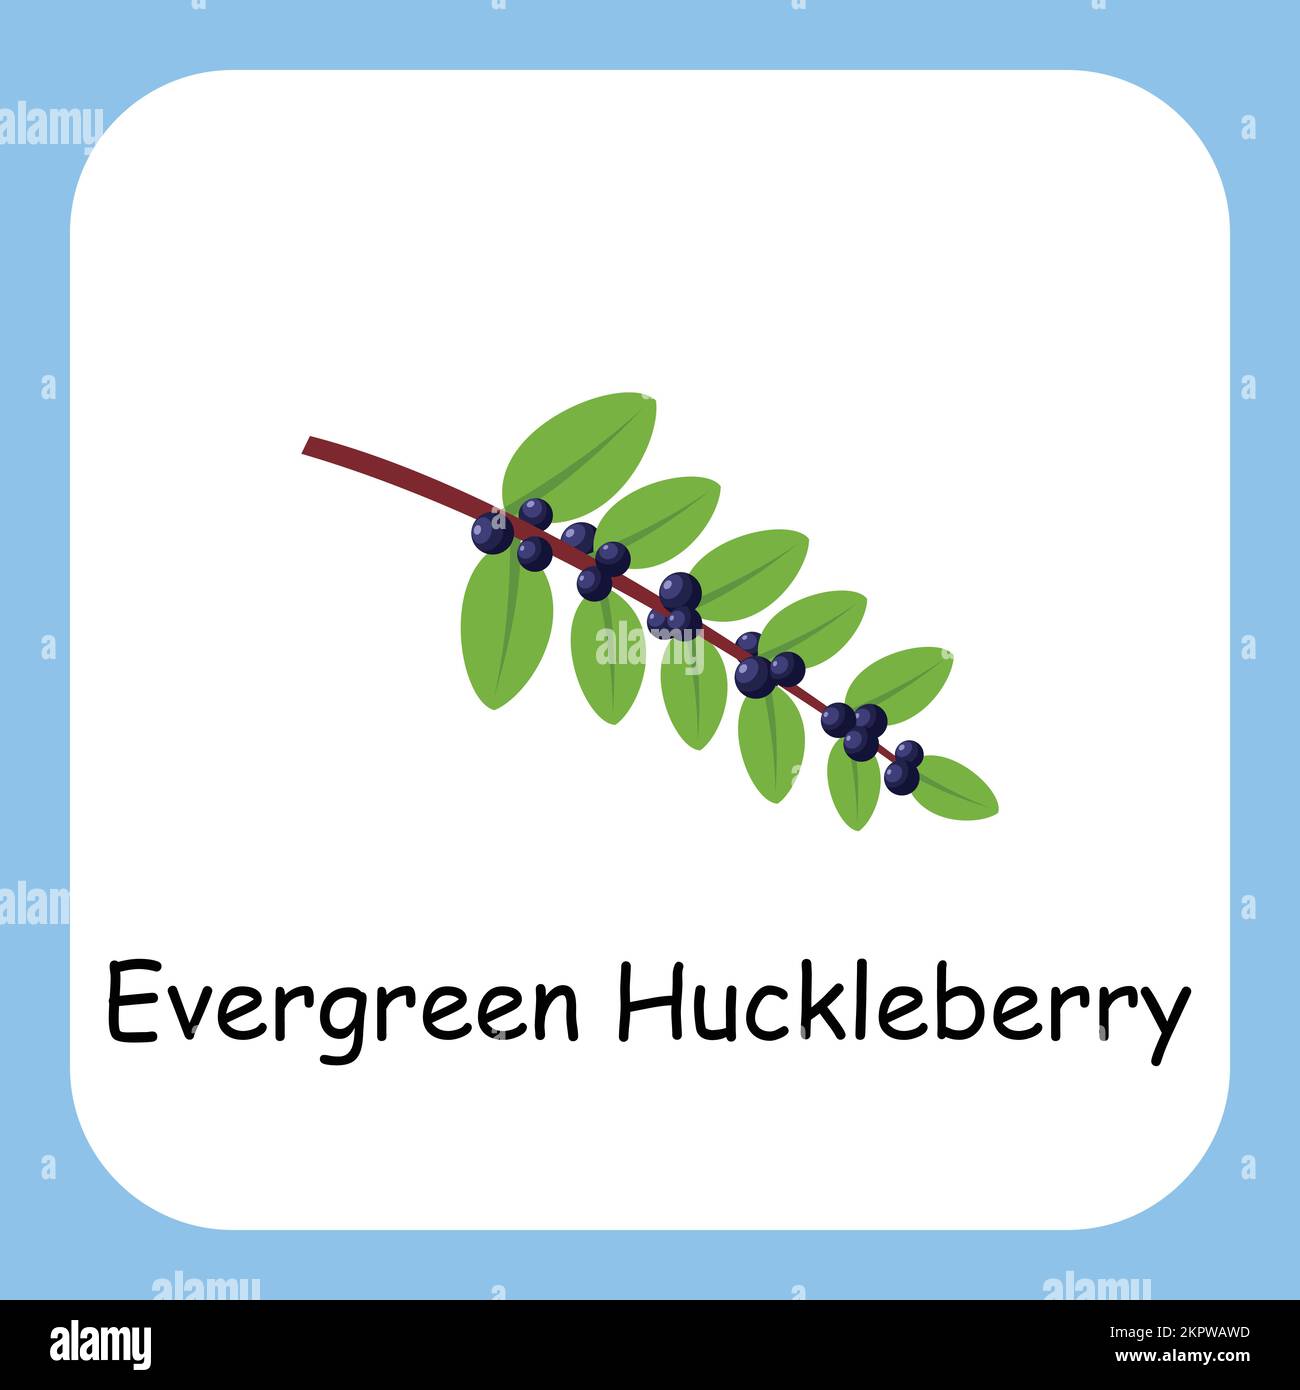 Evergreen Huckleberry Clip Art, Illustration for Kids, cartoon fruit illustration Stock Vector